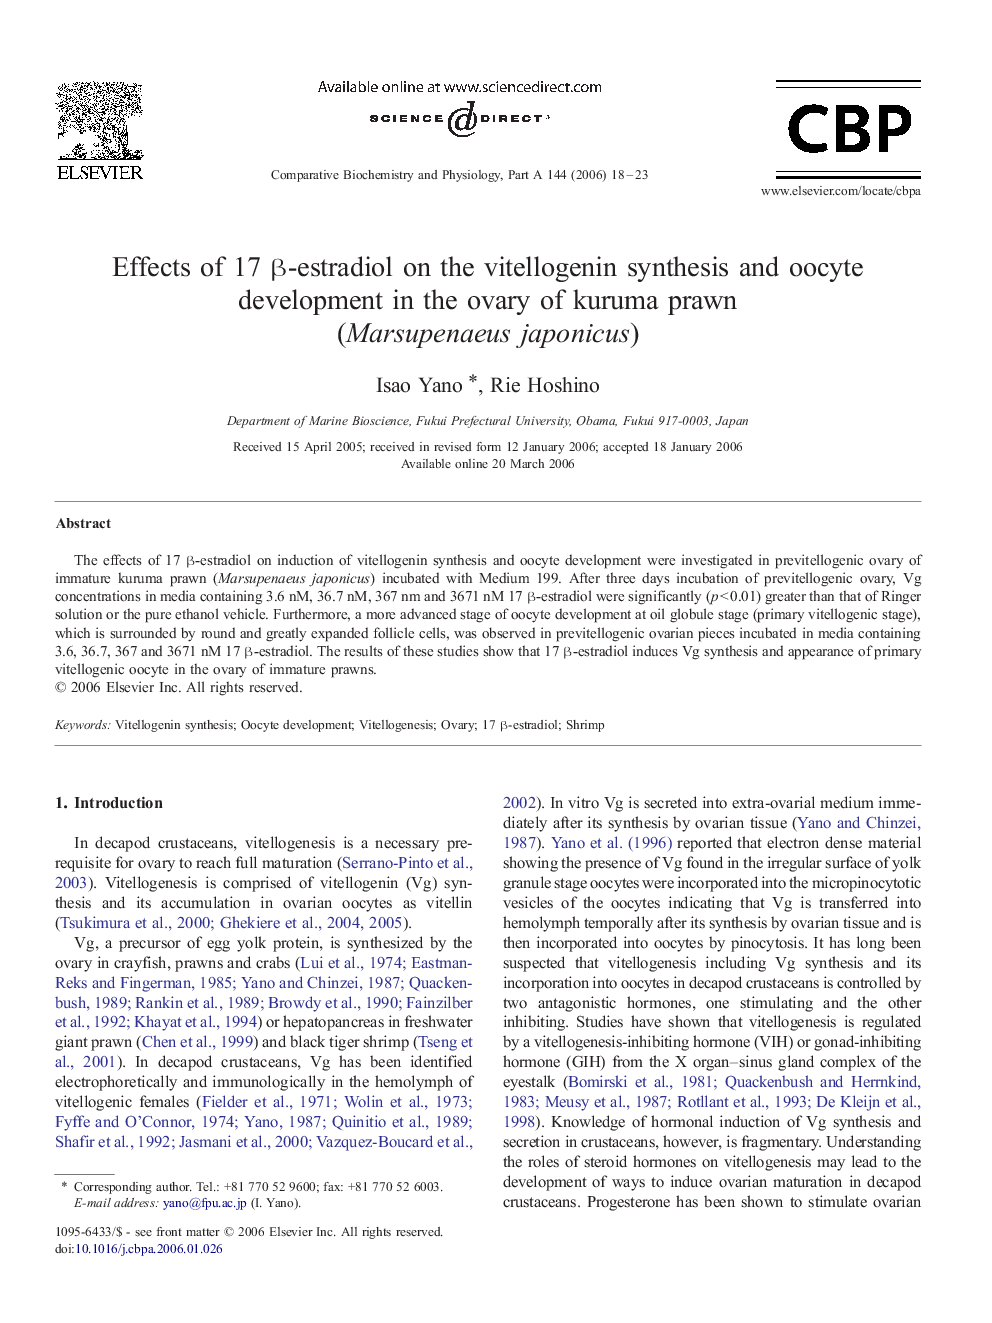 Effects of 17 β-estradiol on the vitellogenin synthesis and oocyte development in the ovary of kuruma prawn (Marsupenaeus japonicus)